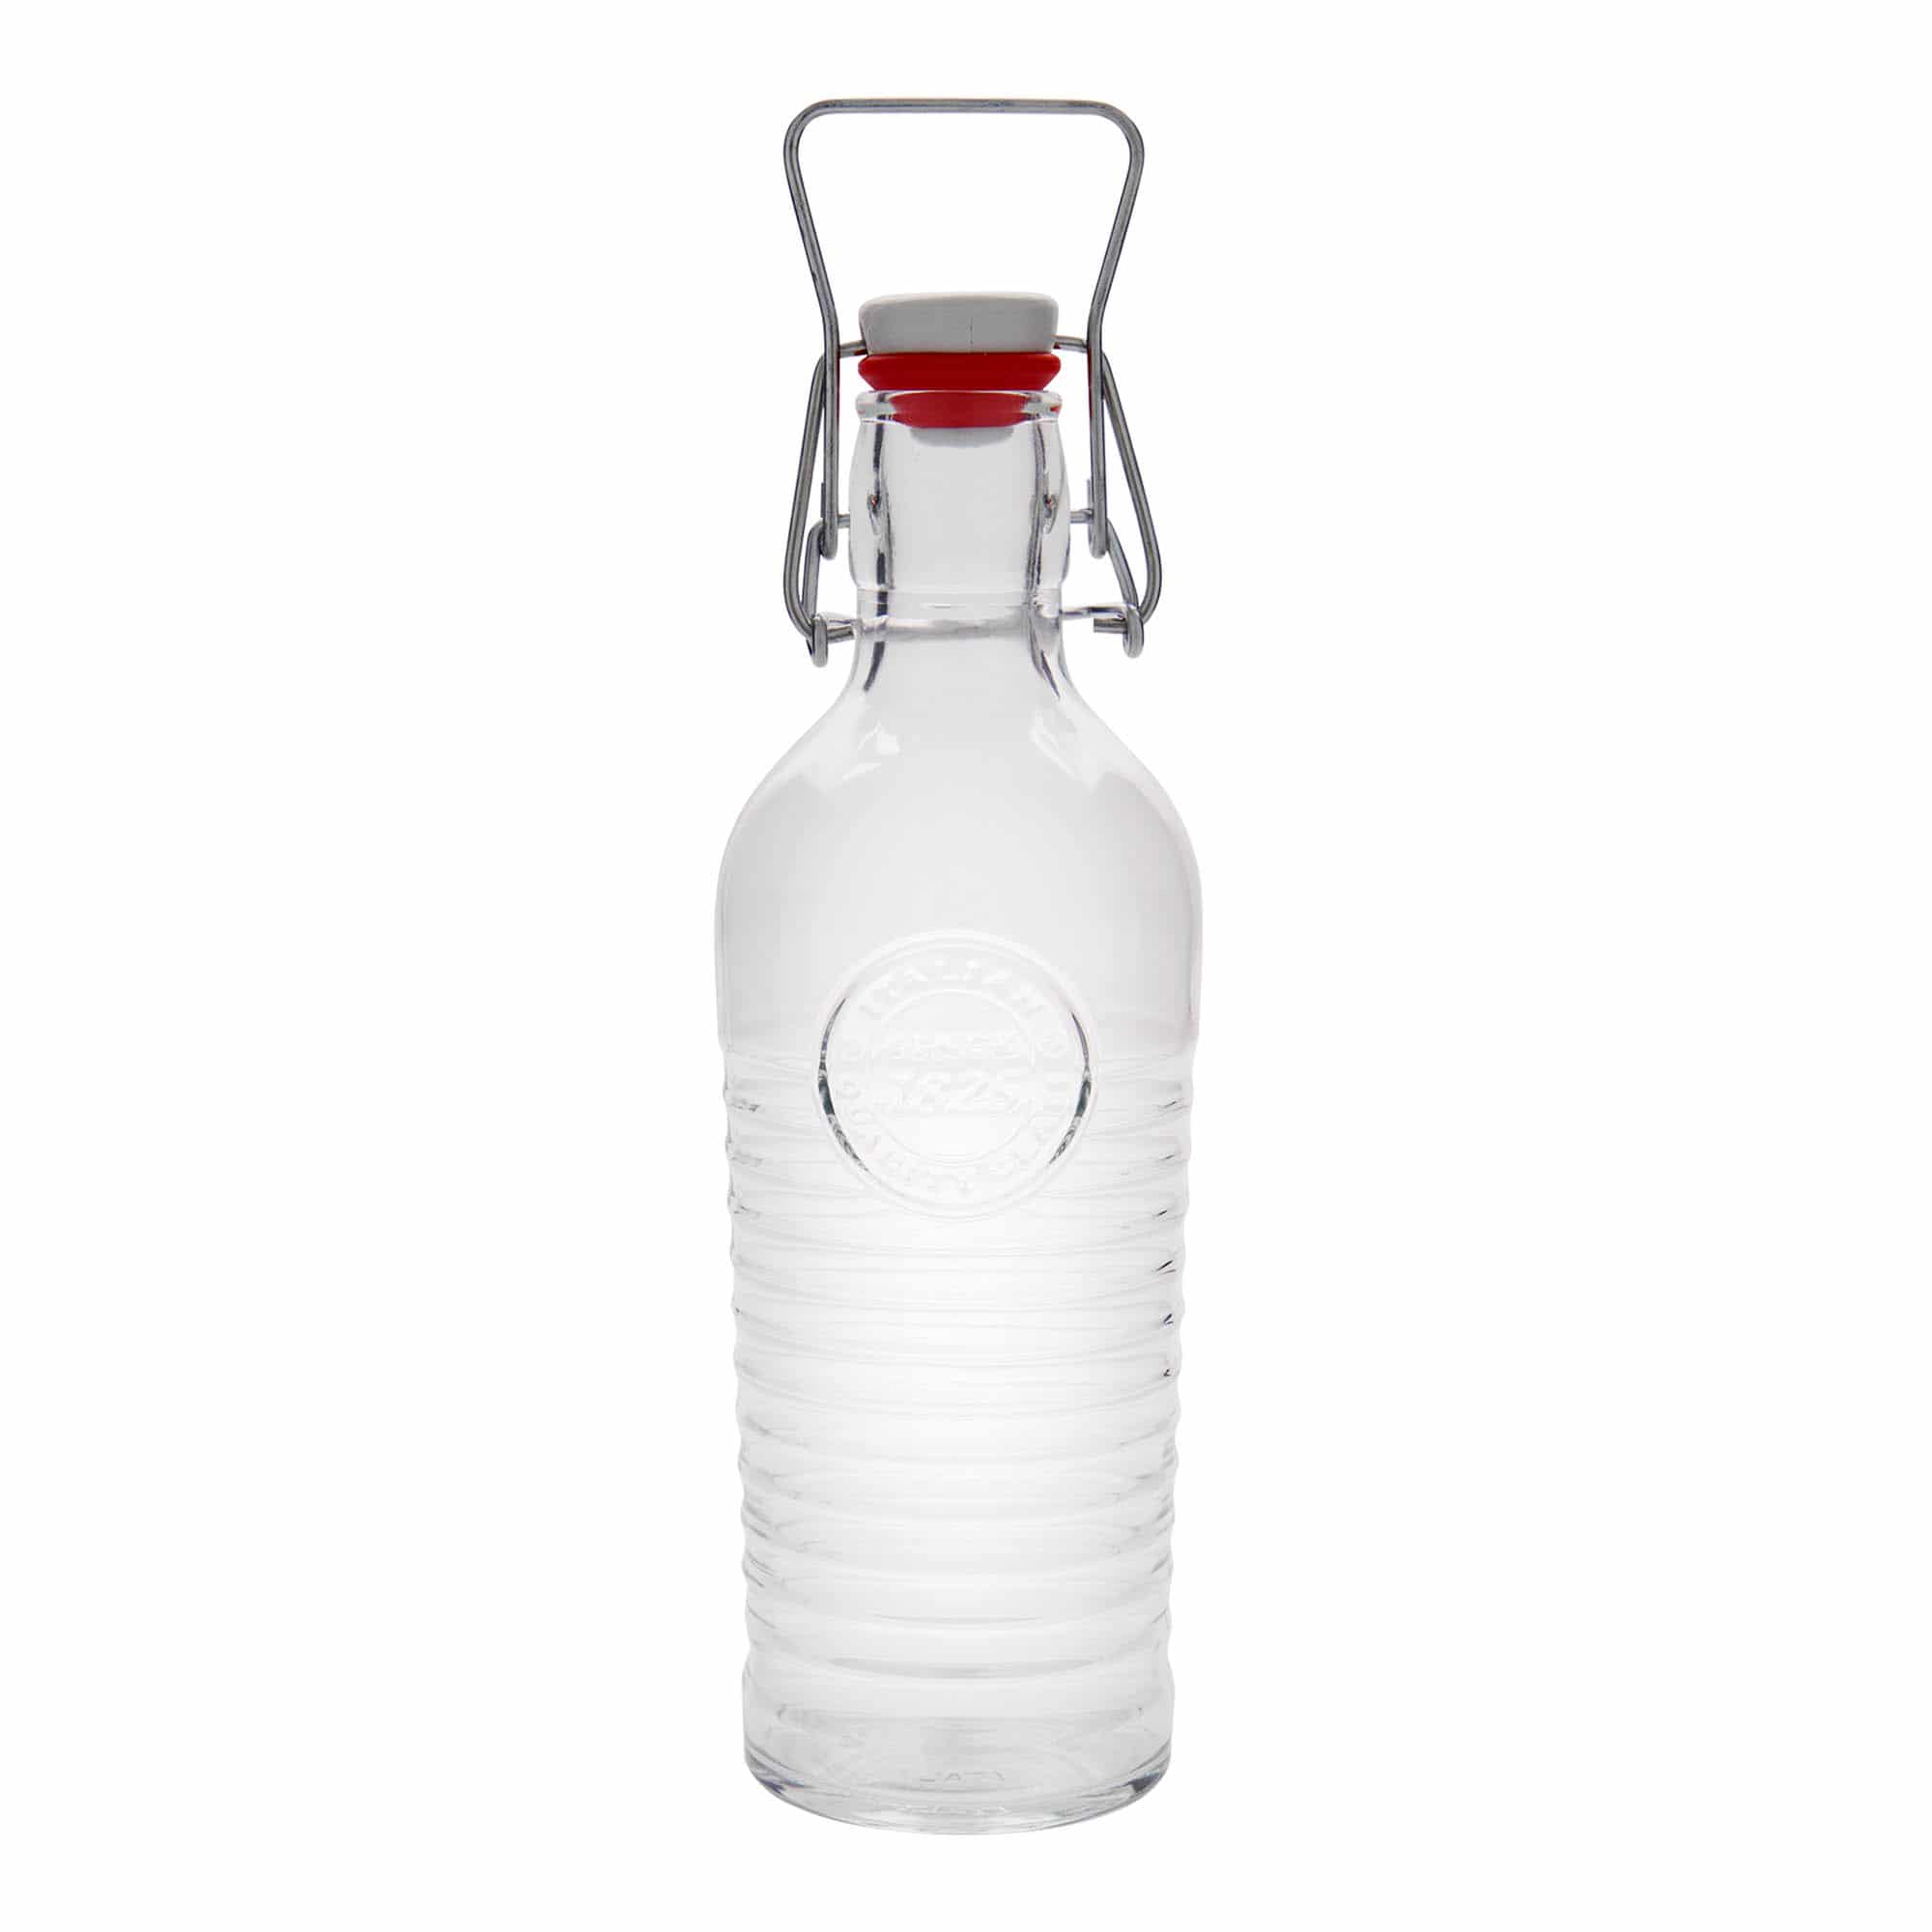 750 ml glass bottle 'Officina 1825', closure: swing top